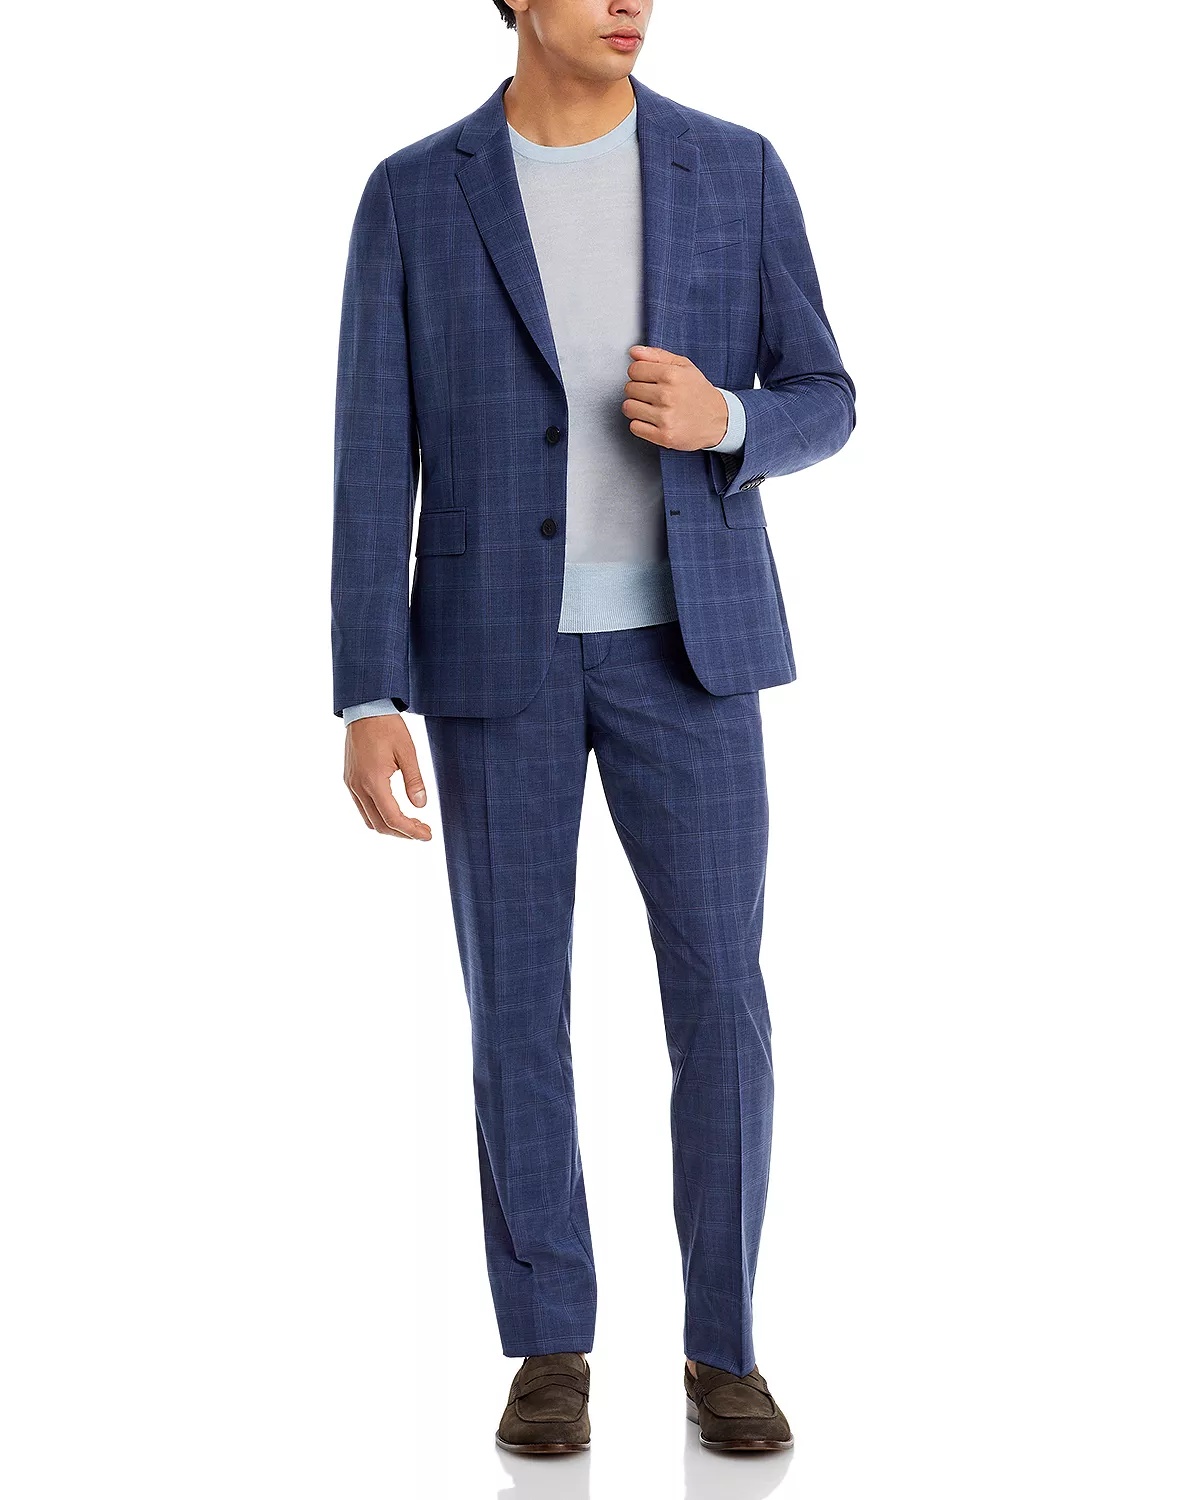 Soho Plaid Extra Slim Fit Suit - 2